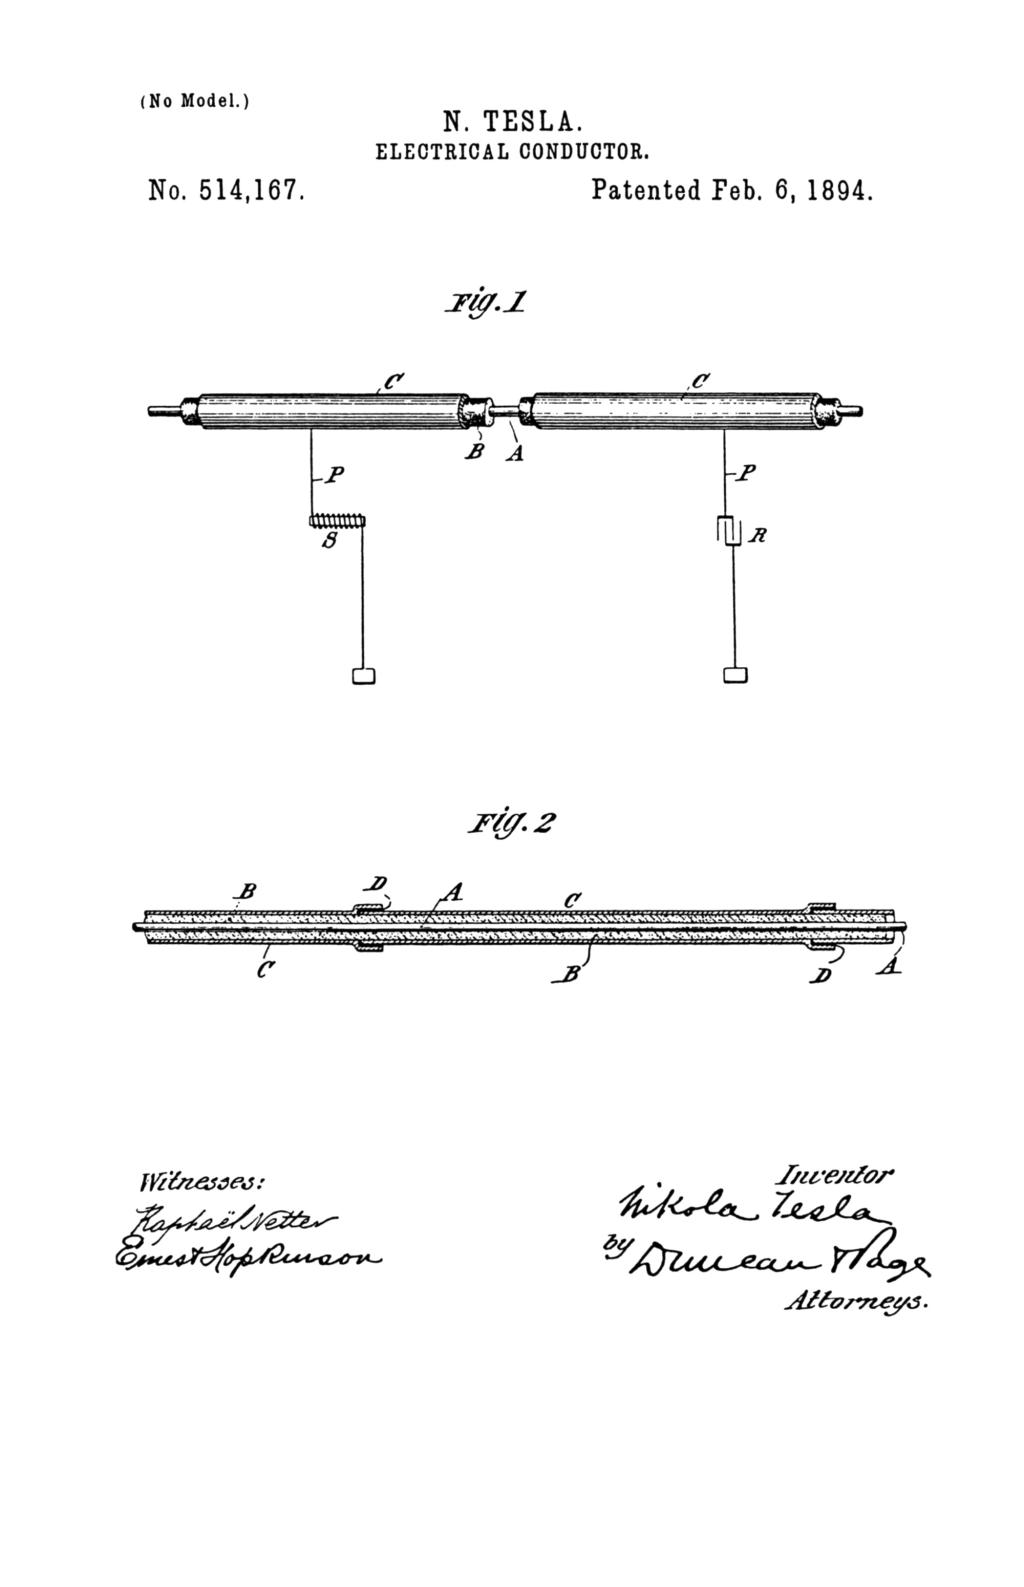 Nikola Tesla U.S. Patent 514,167 - Electrical Conductor - Image 1